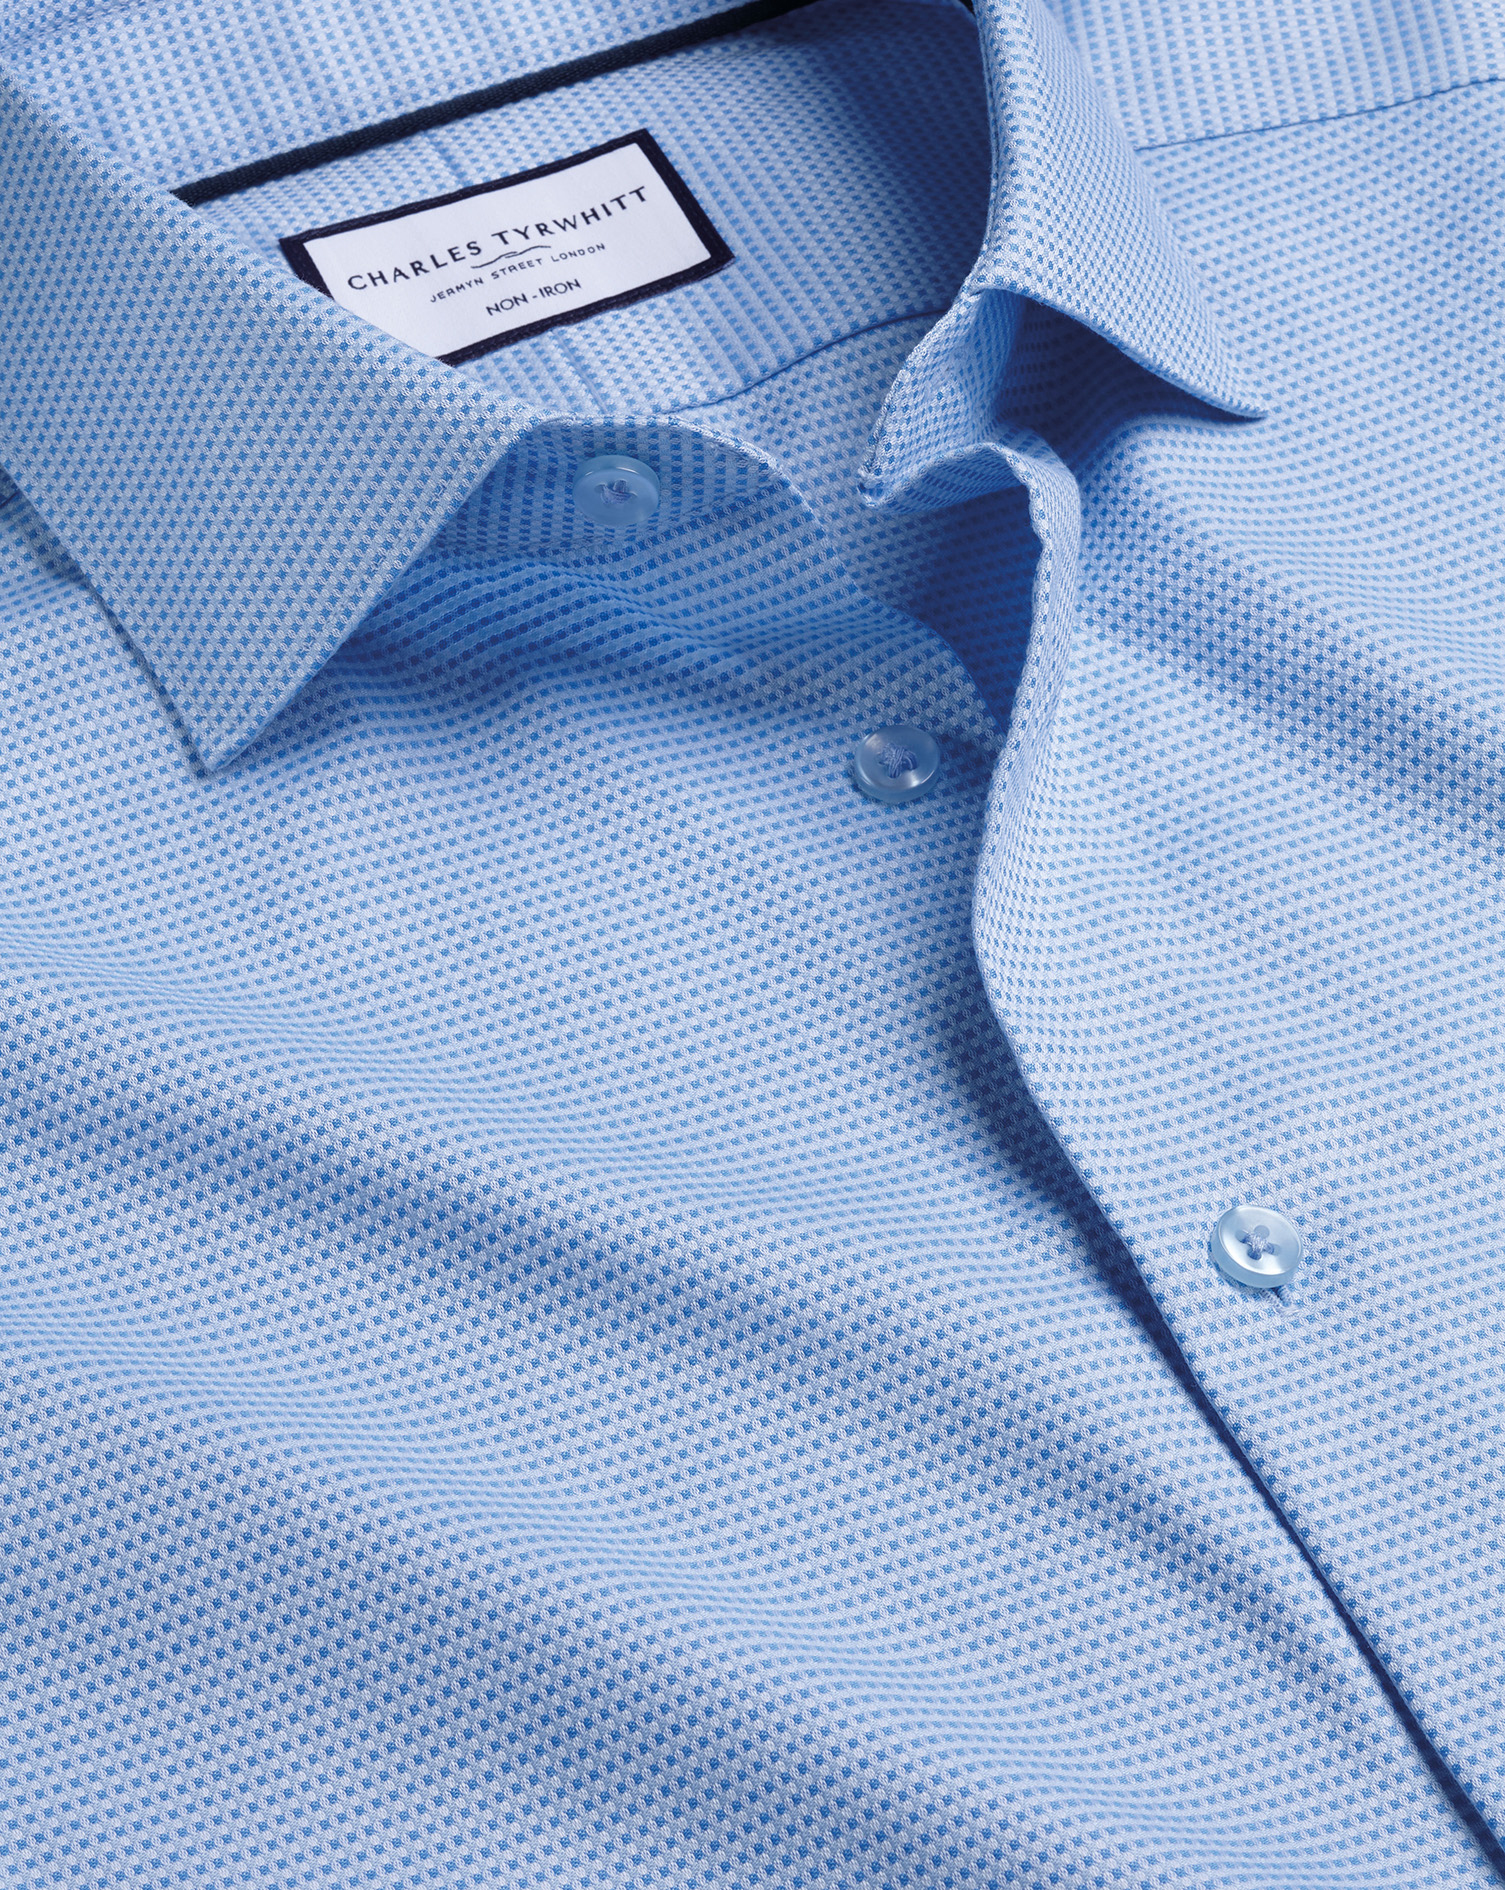 Men's Charles Tyrwhitt Non-Iron Stretch Texture Square Dress Shirt - Sky Blue Single Cuff Size Small